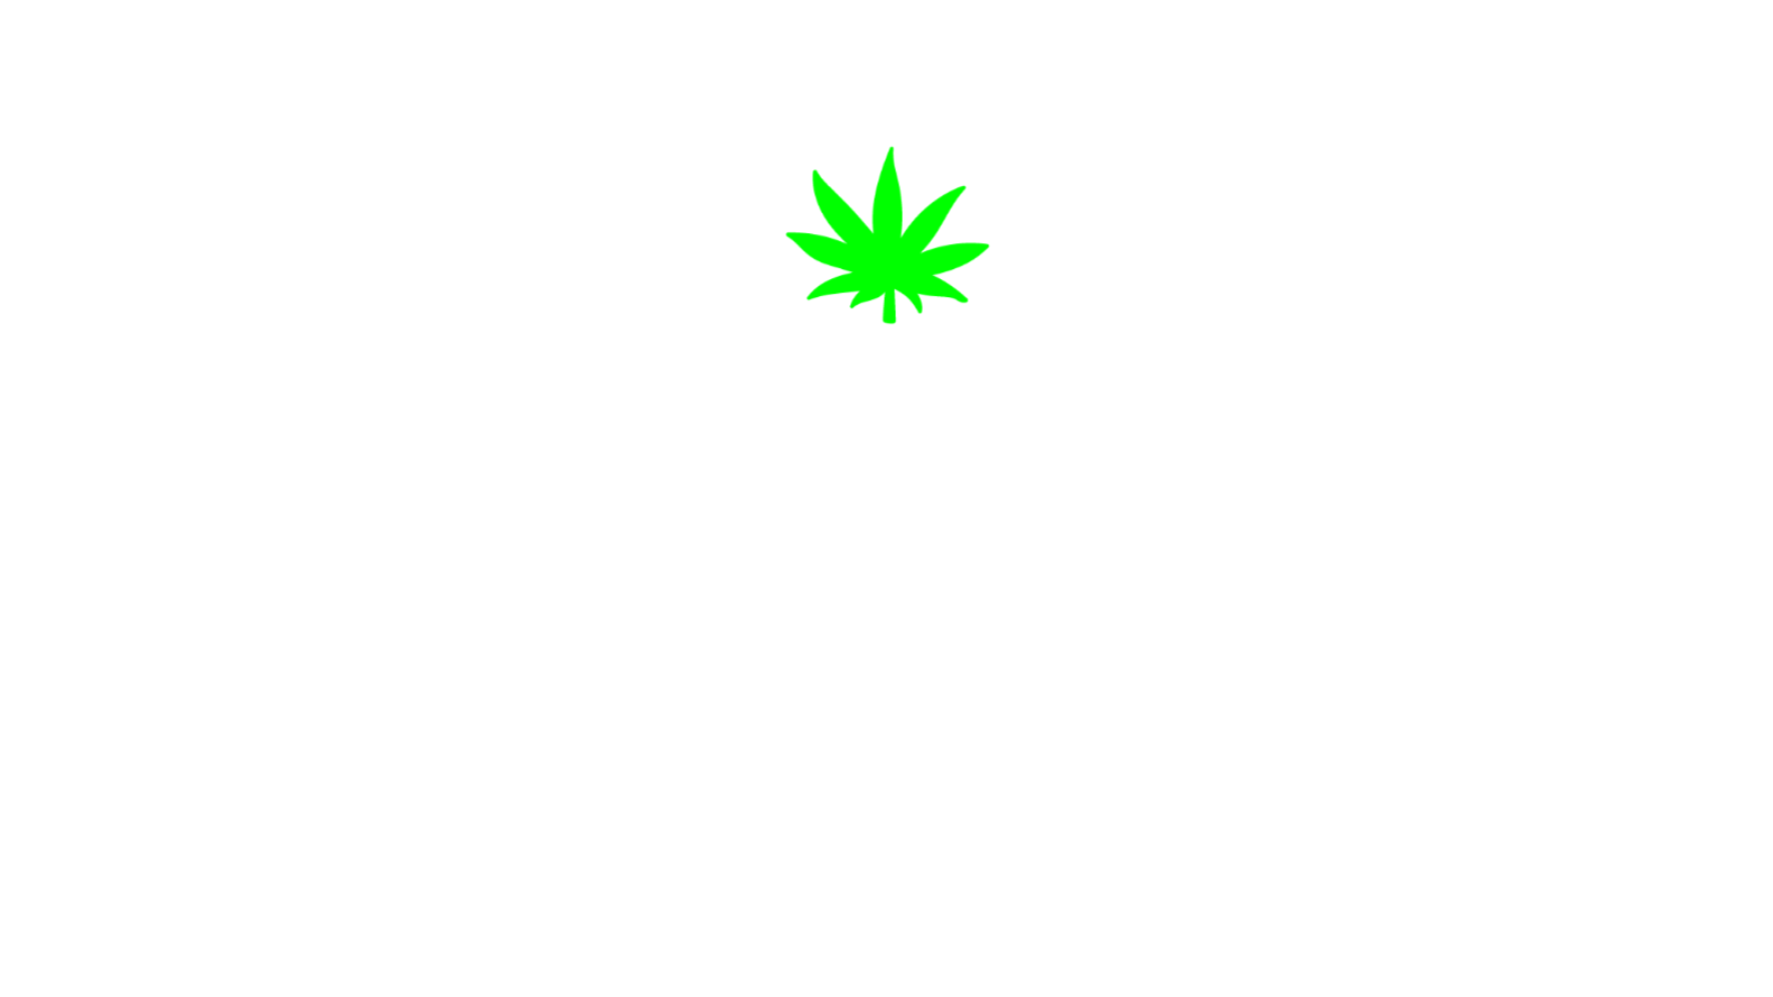 www.dadselixir.com